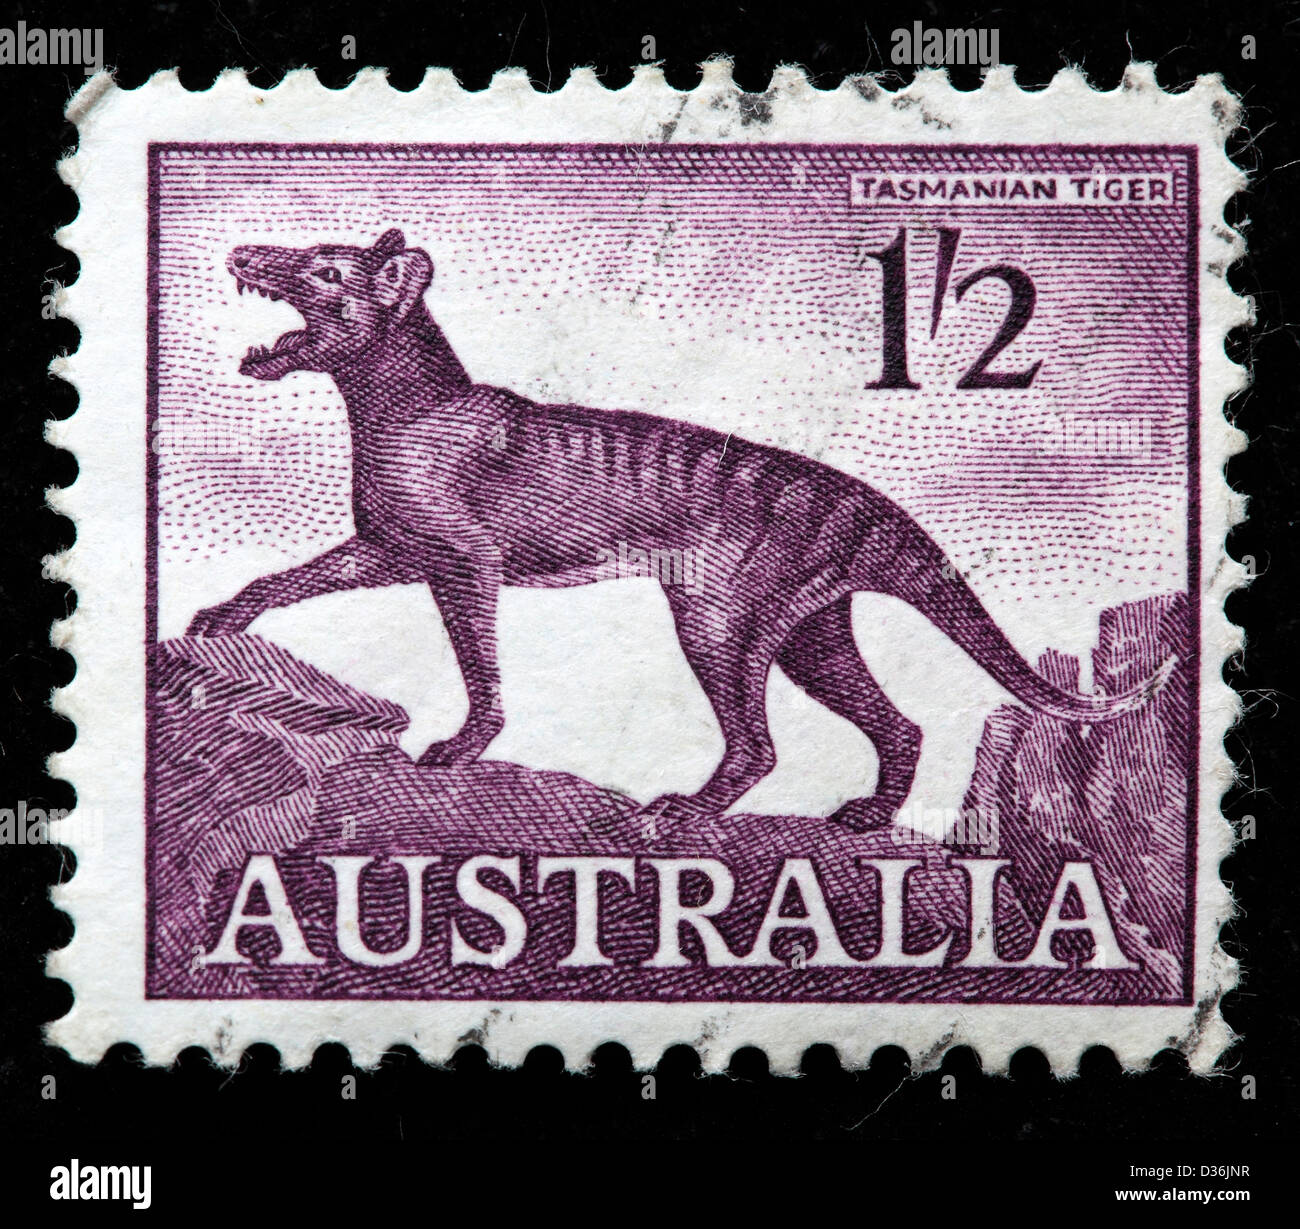 Tasmanian tiger, postage stamp, Australia, 1959 Stock Photo